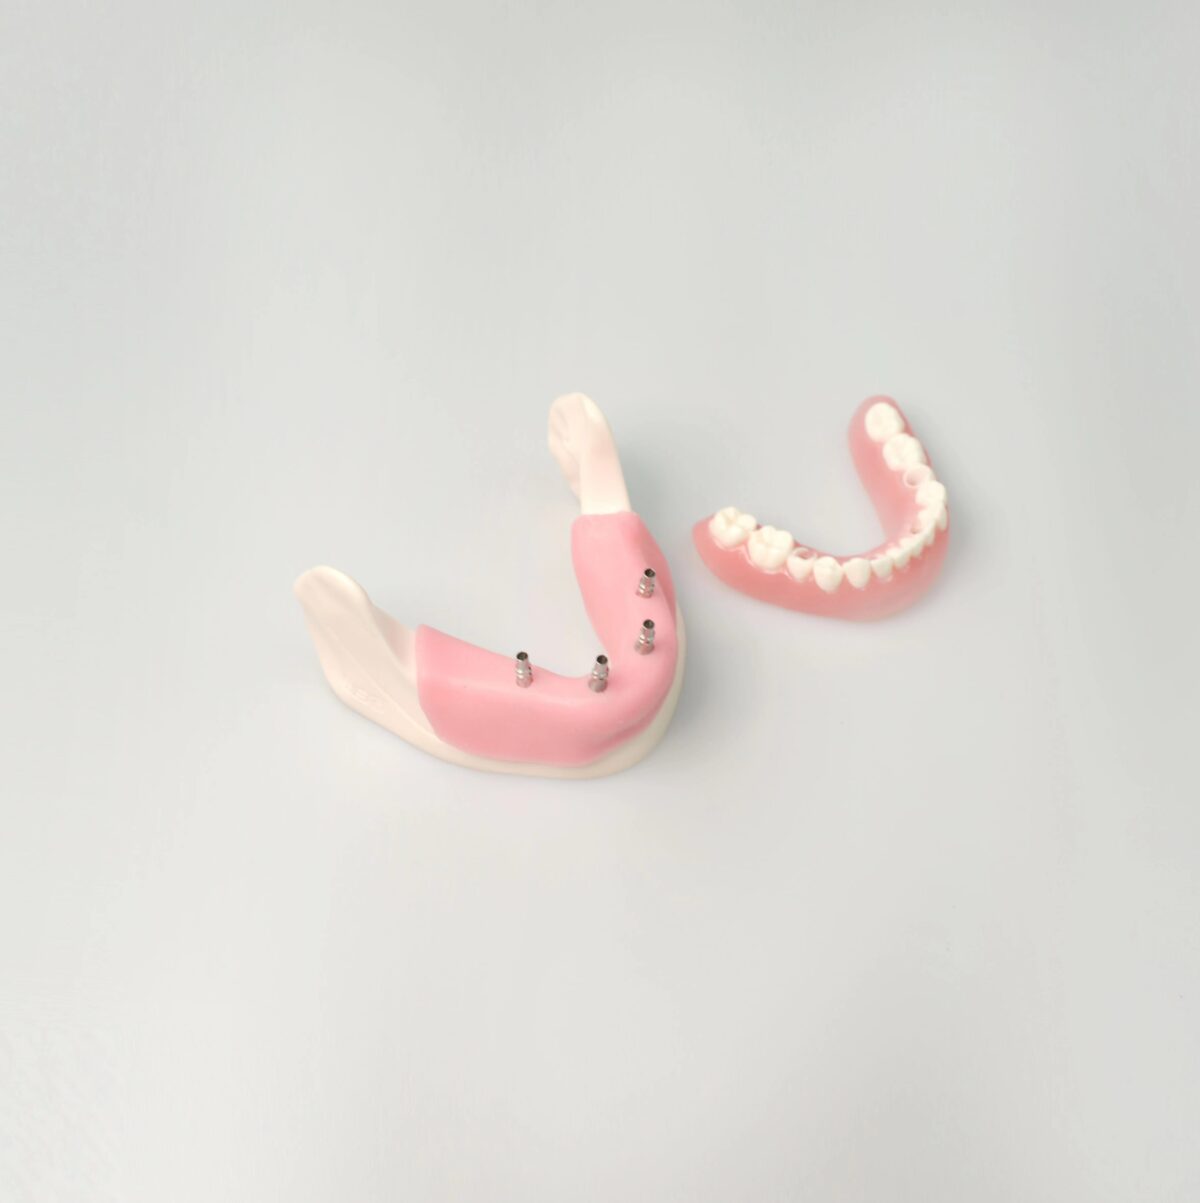 oral implant practice model